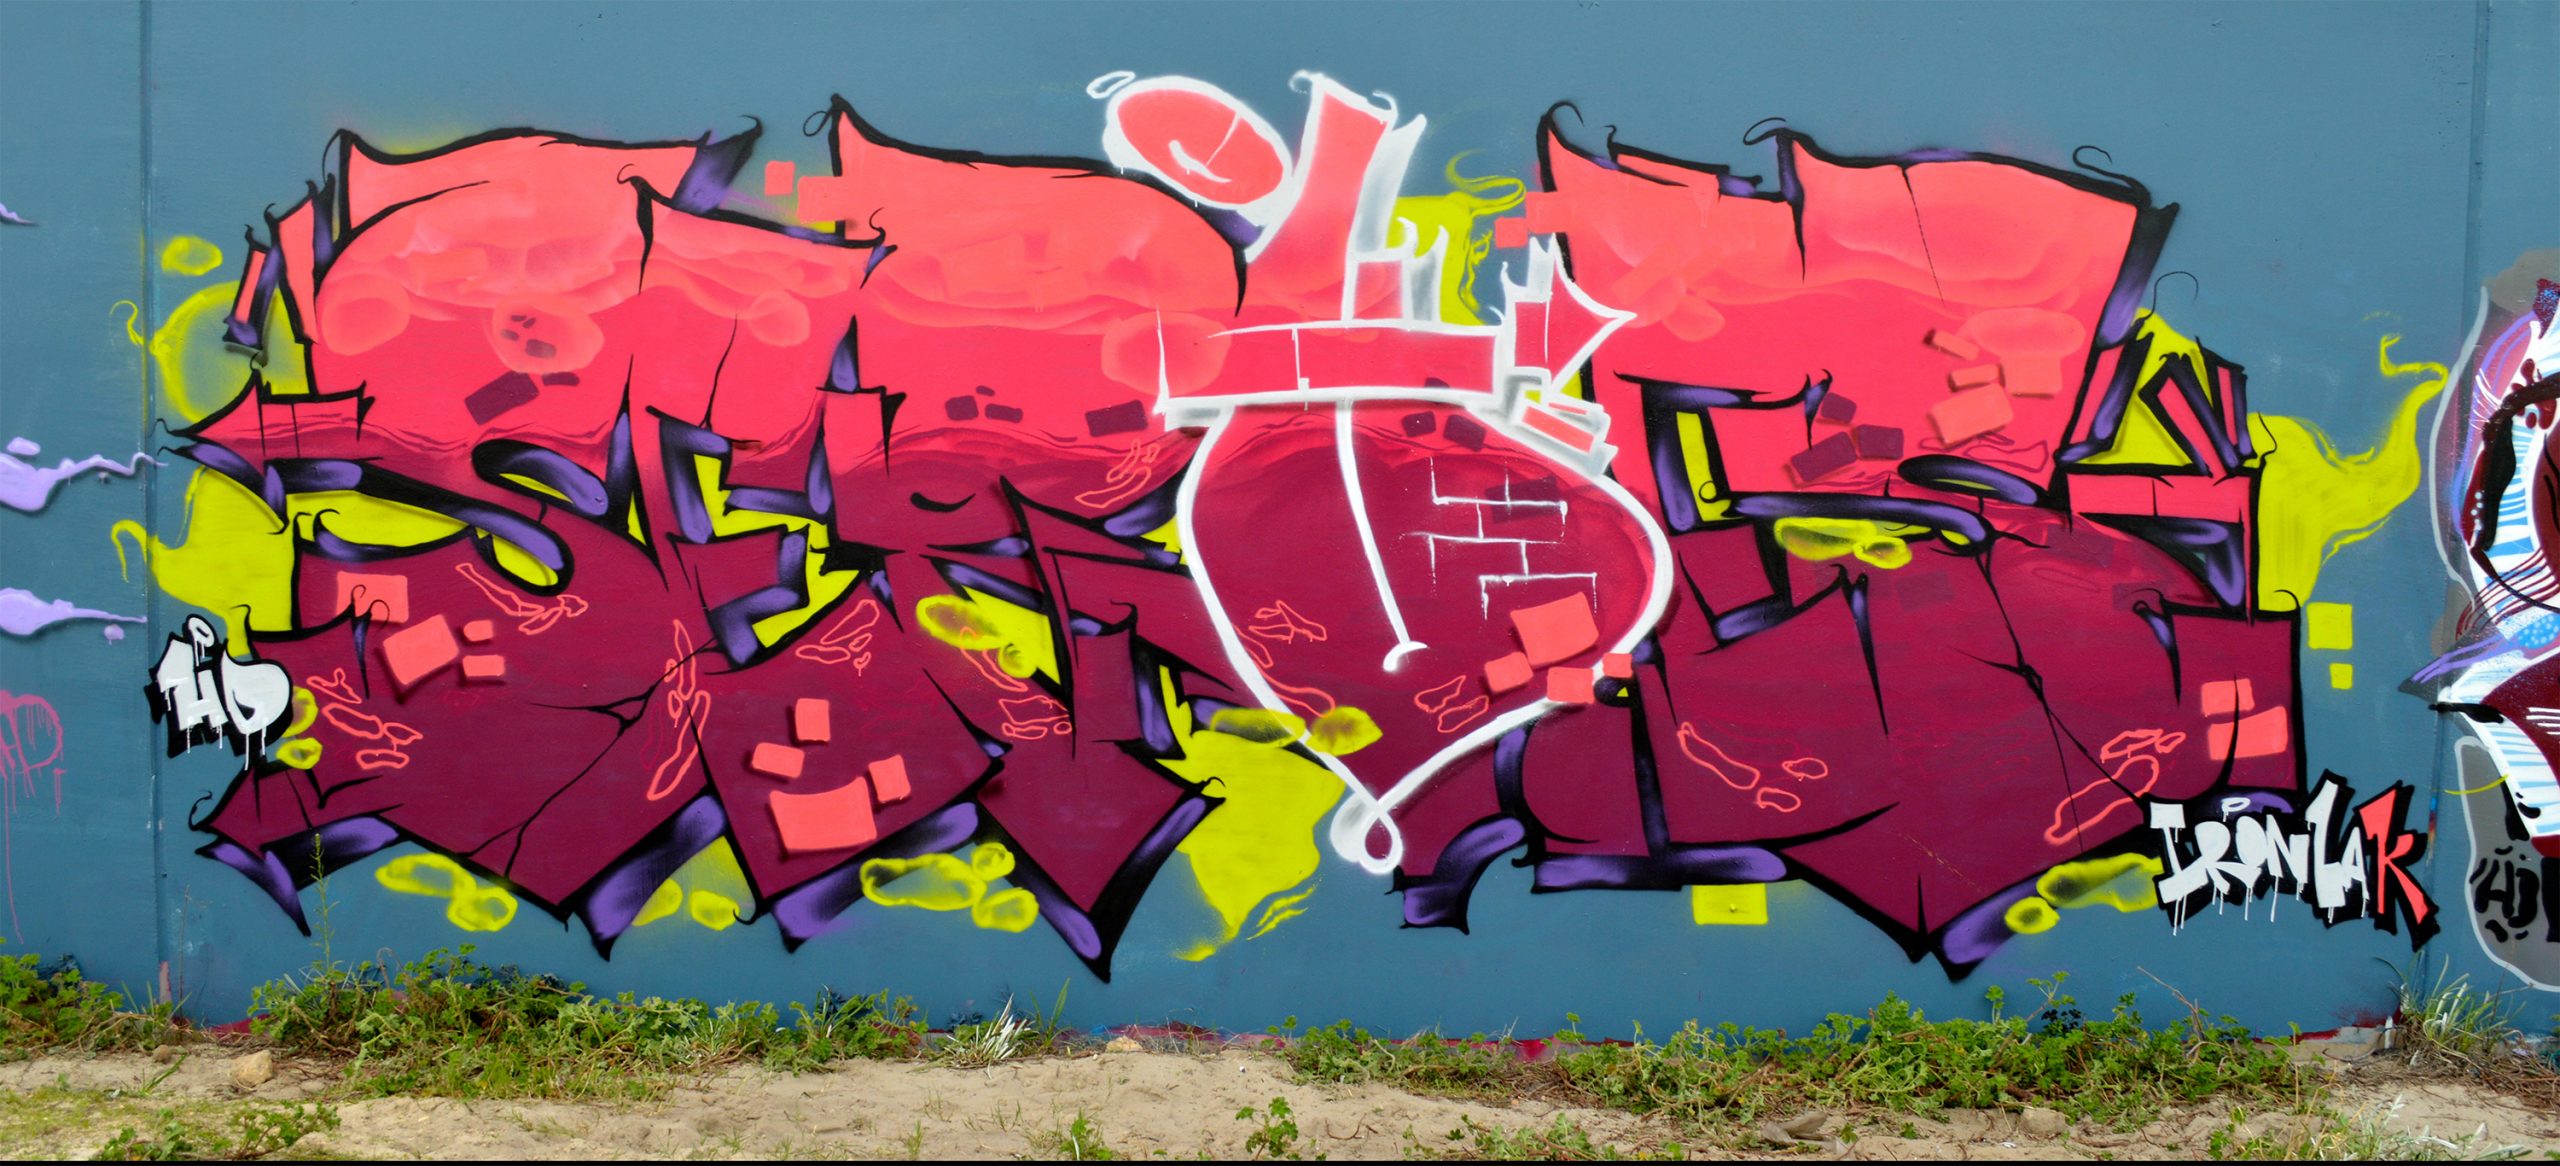 Ironlak Graffiti Serves